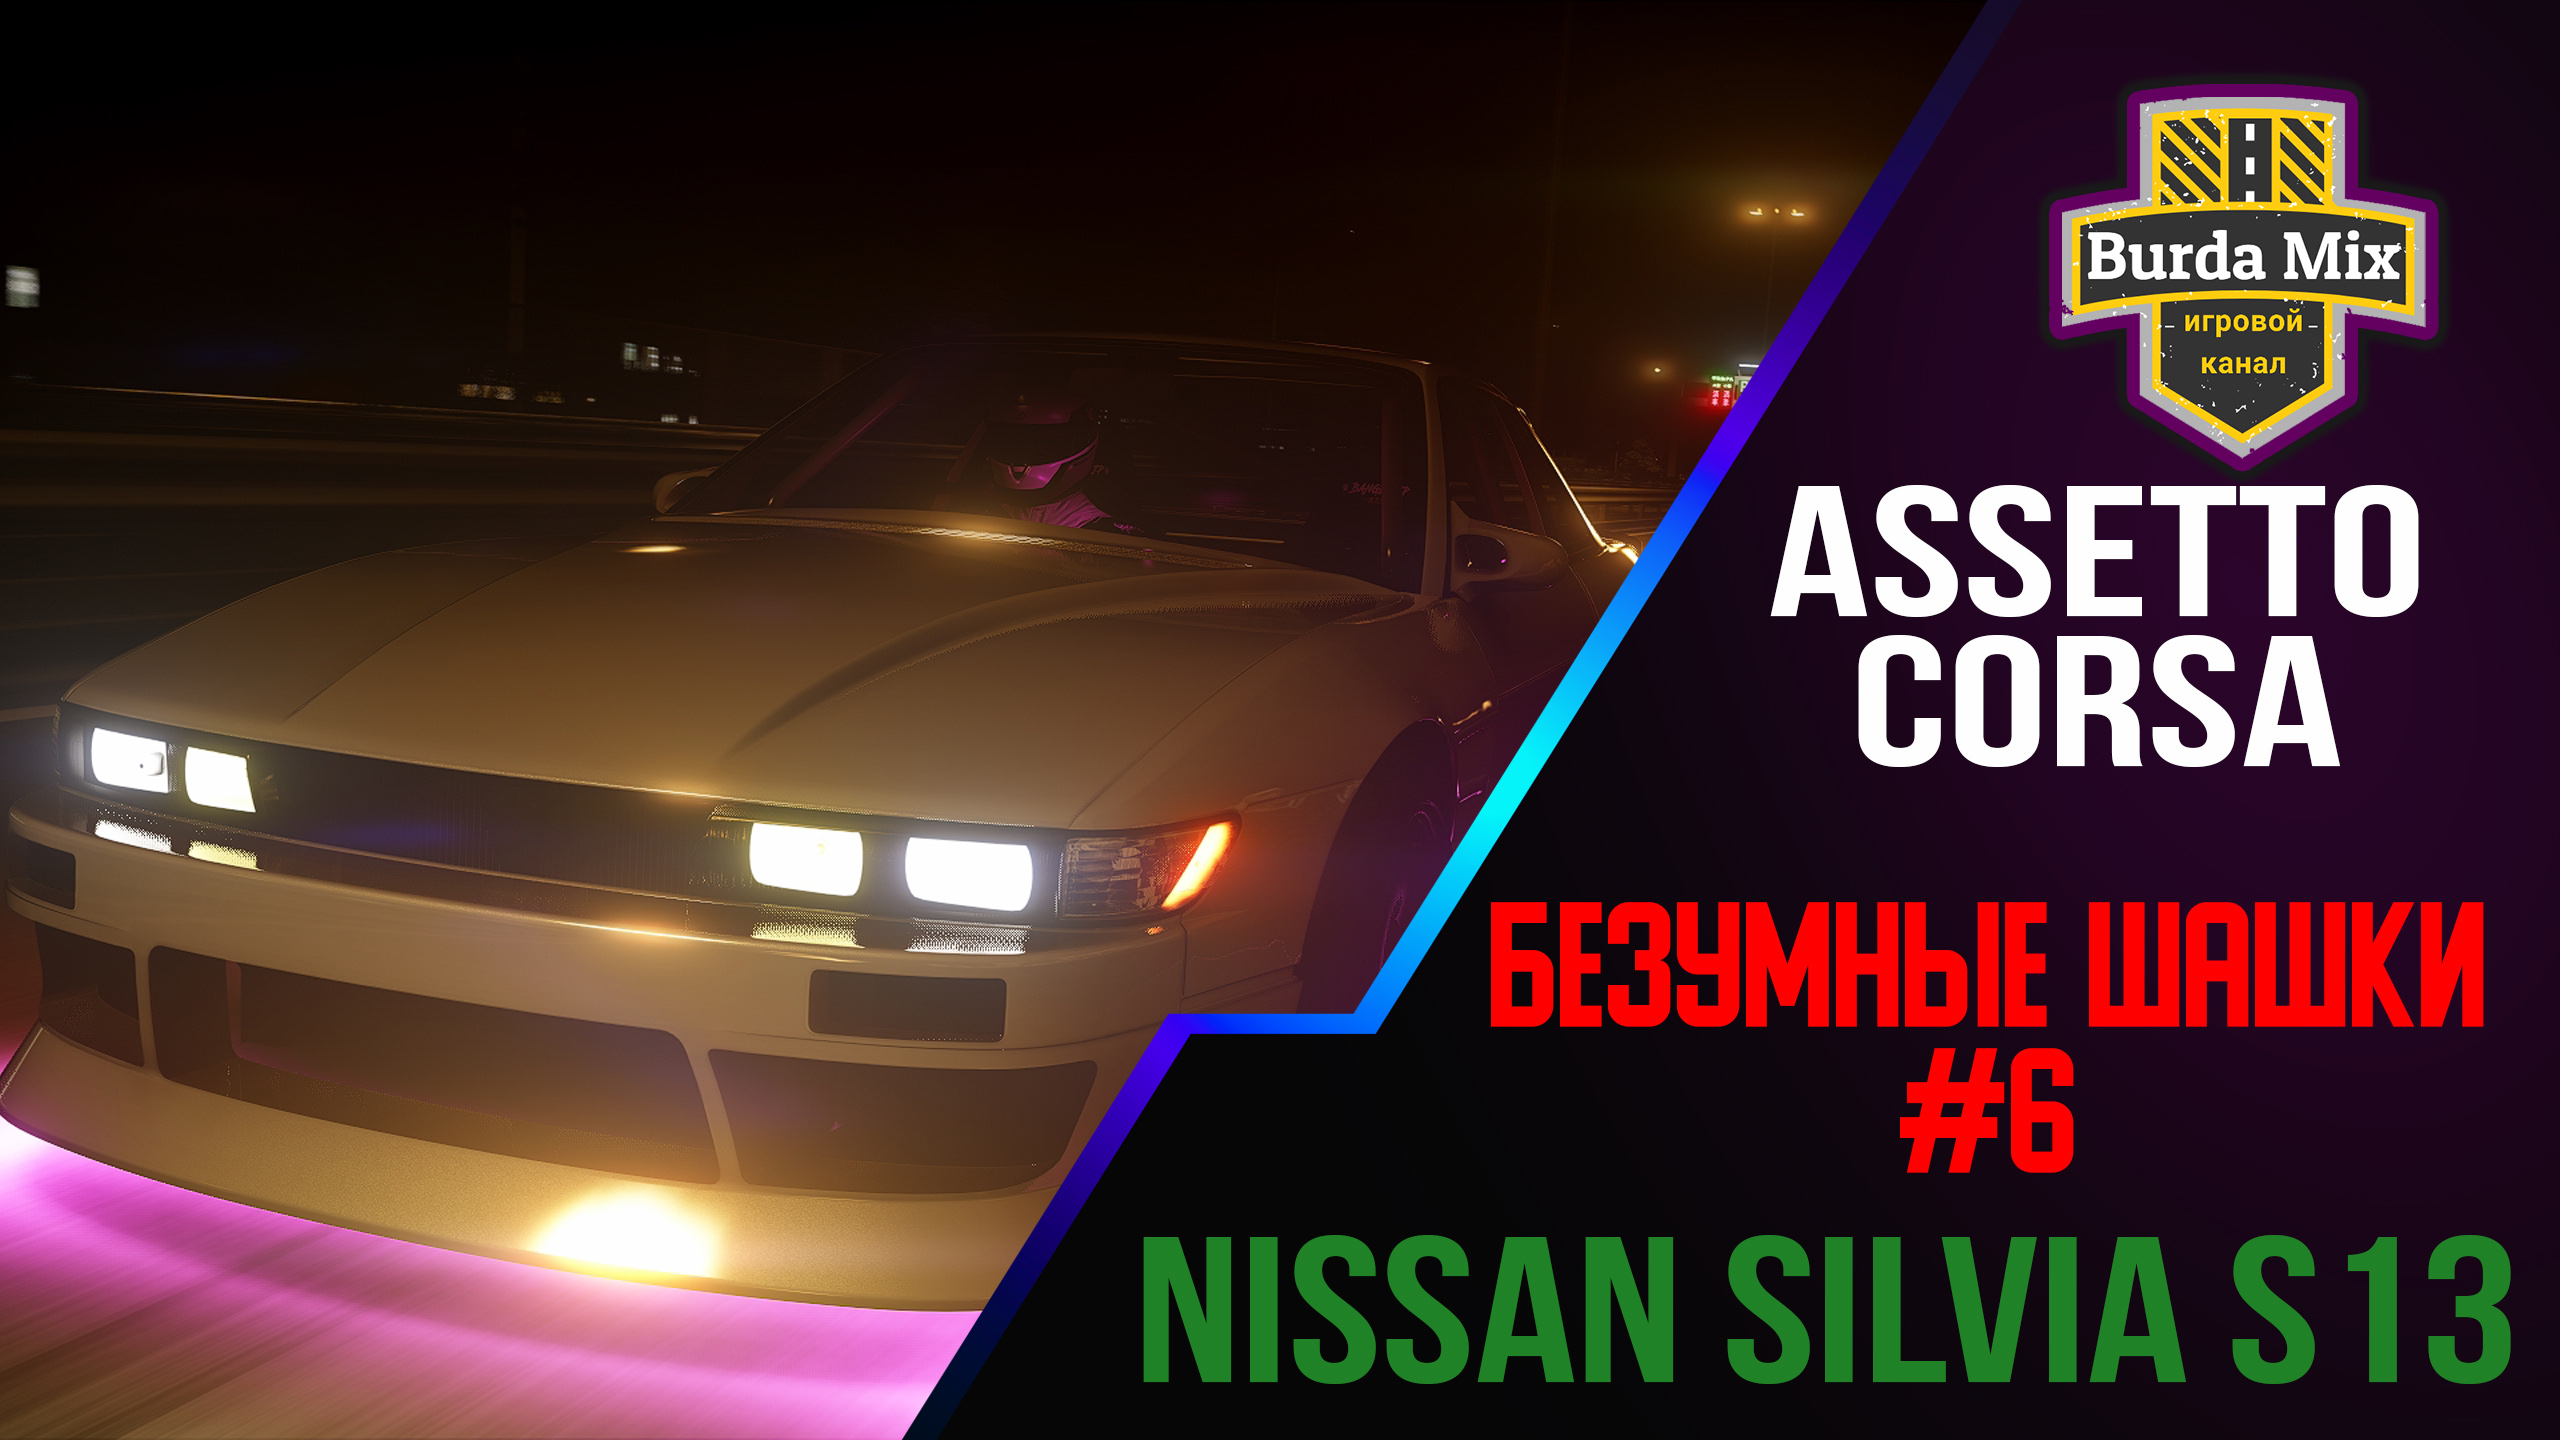 Шашки на Nissan Silvia s13 с трафиком в  Assetto corsa